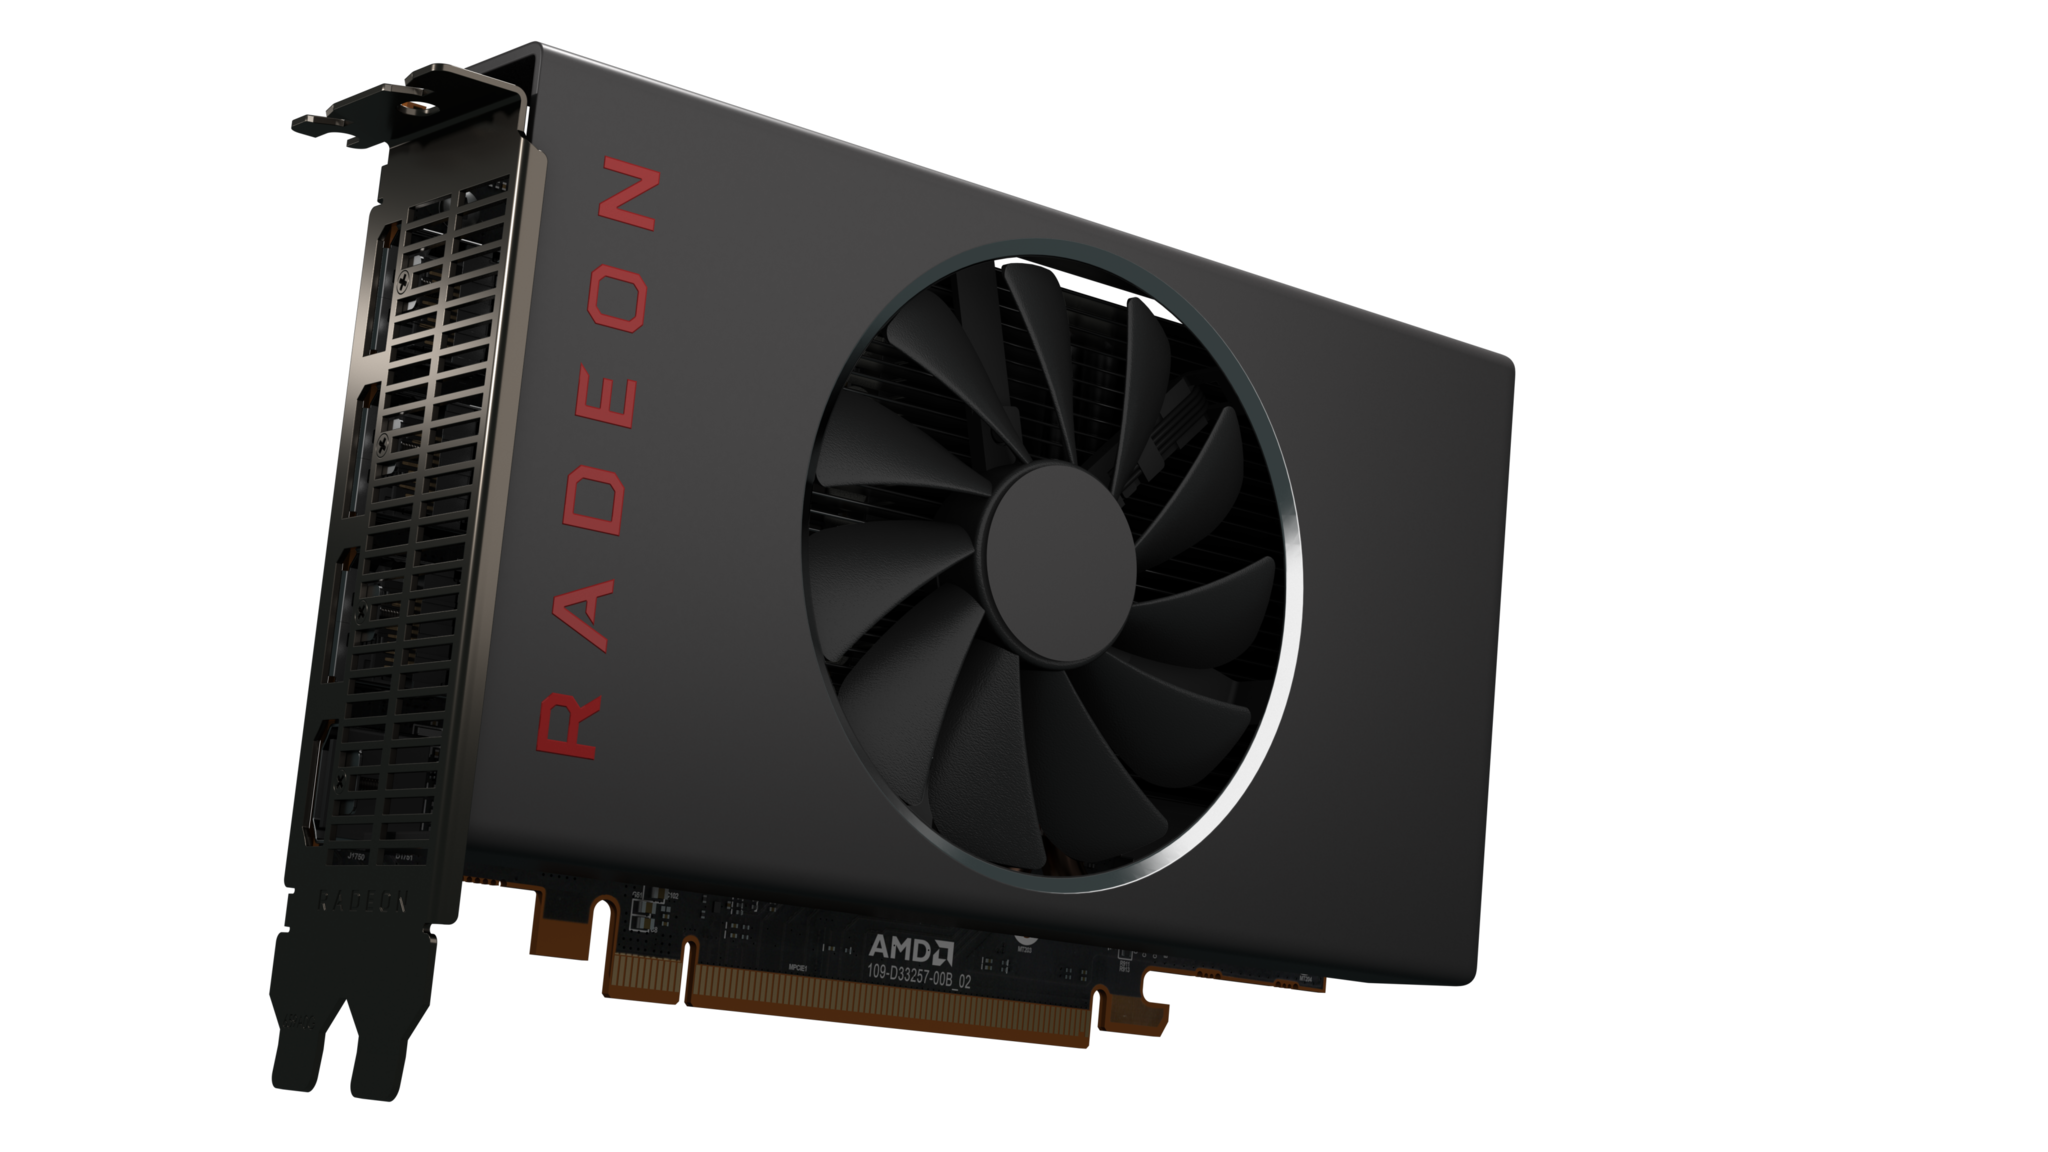 1 AMD เปิดตัวการ์ดจอ AMD Radeon RX 5500 ซีรี่ย์รุ่นใหม่ล่าสุดขนาด 7nm ทั้งเดสก์ท็อปและแล็ปท็อปเน้นตอบโจทย์เกมส์มิ่งในราคาสุดคุ้ม